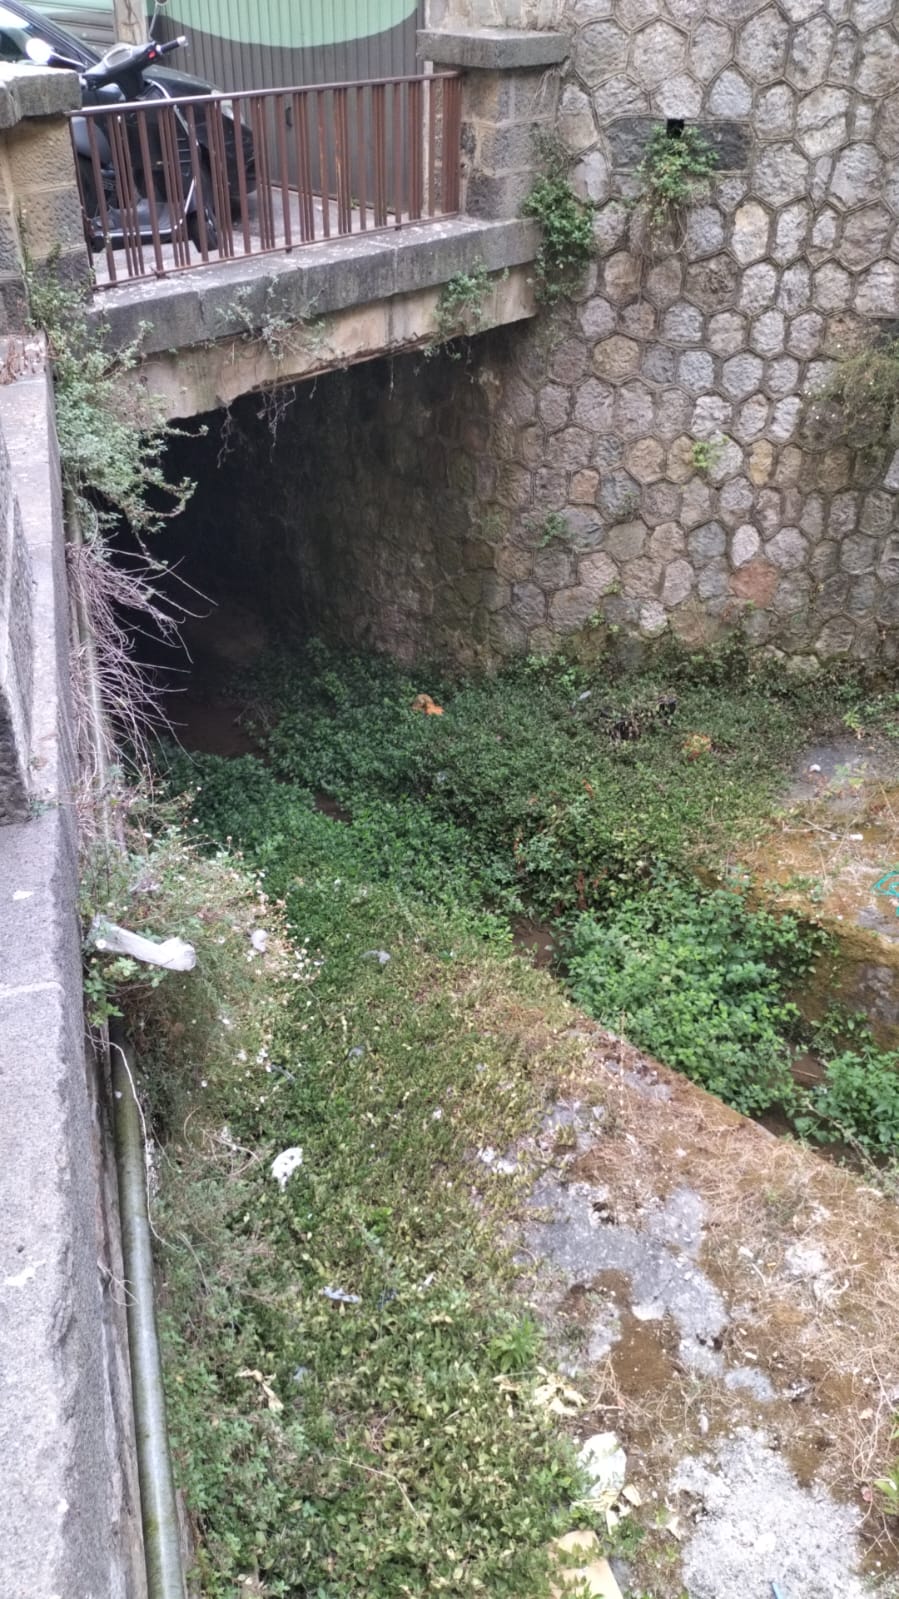 Salerno: torrente Fusandola, consigliere comunale Pessolano “Urge pulizia radicale”